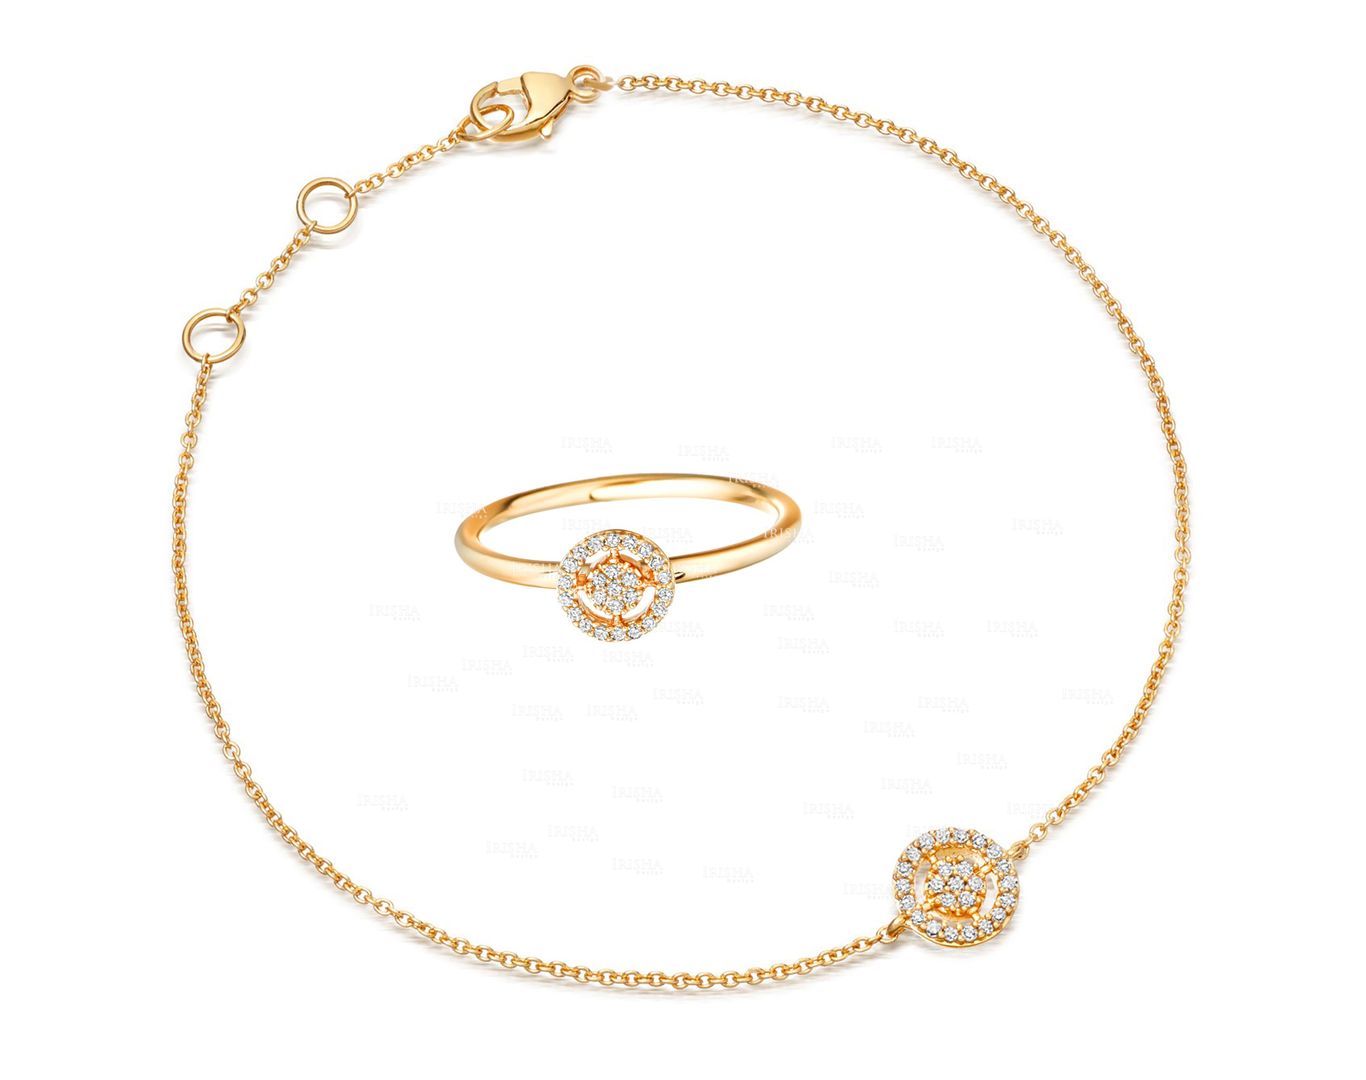 Genuine Diamond Concentric Circle Design Ring Bracelet 14K Gold Jewelry Set